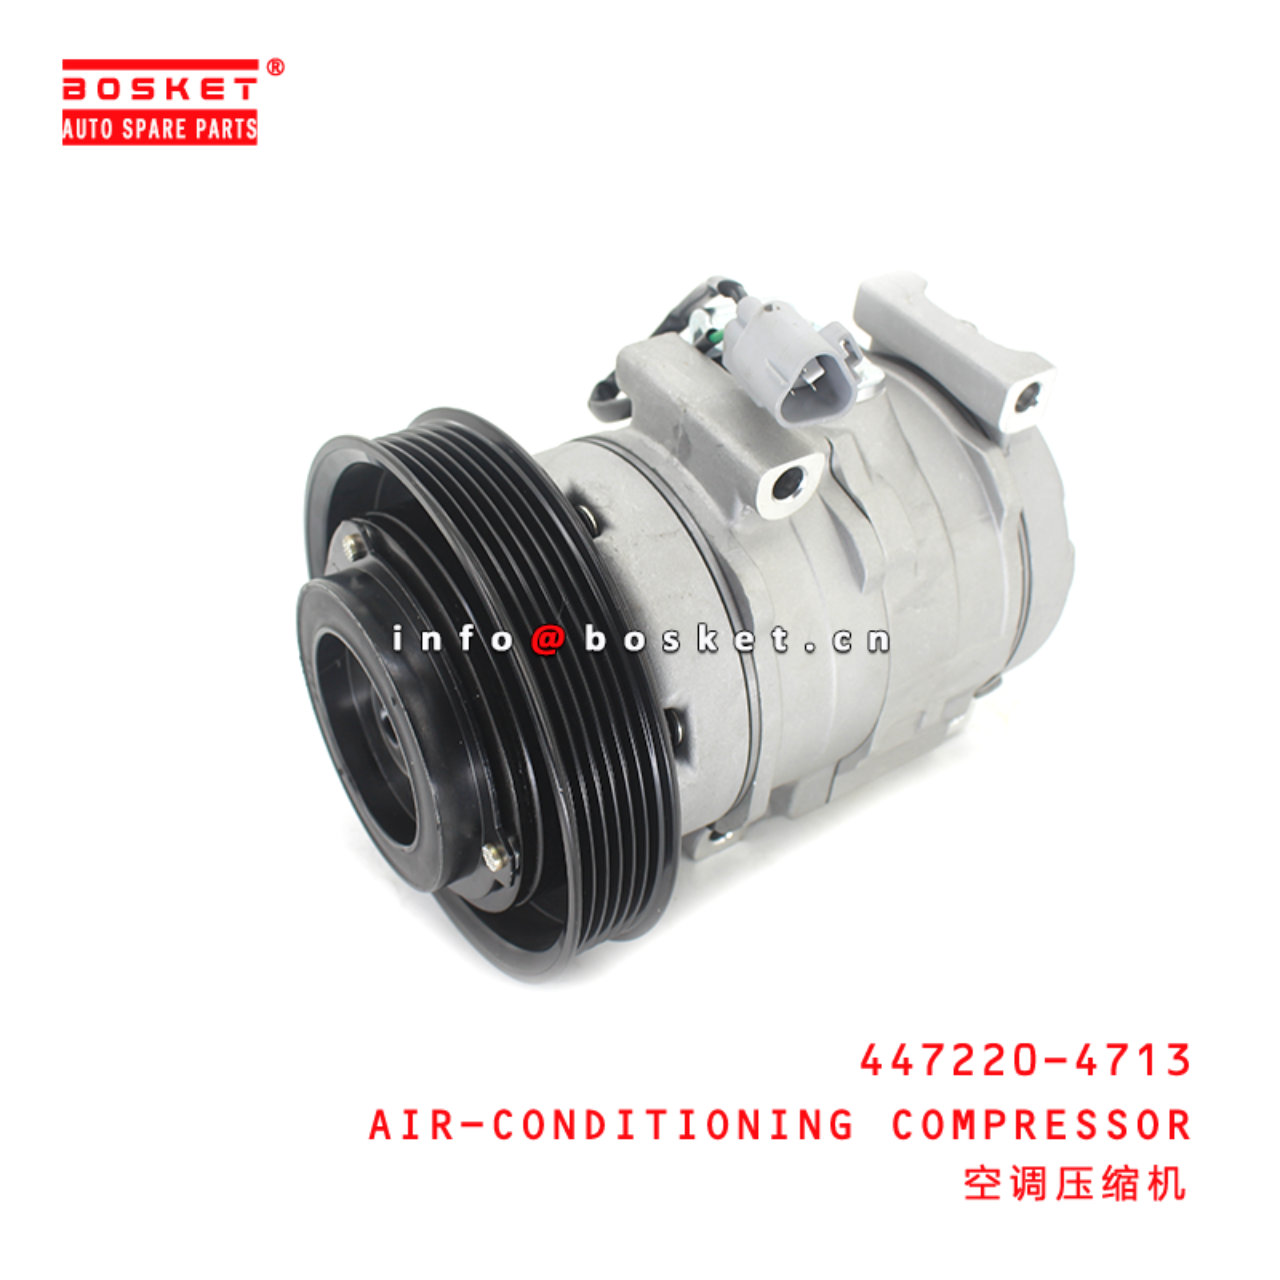 447220-4713 Air-Conditioning Compressor Suitable for ISUZU HINO